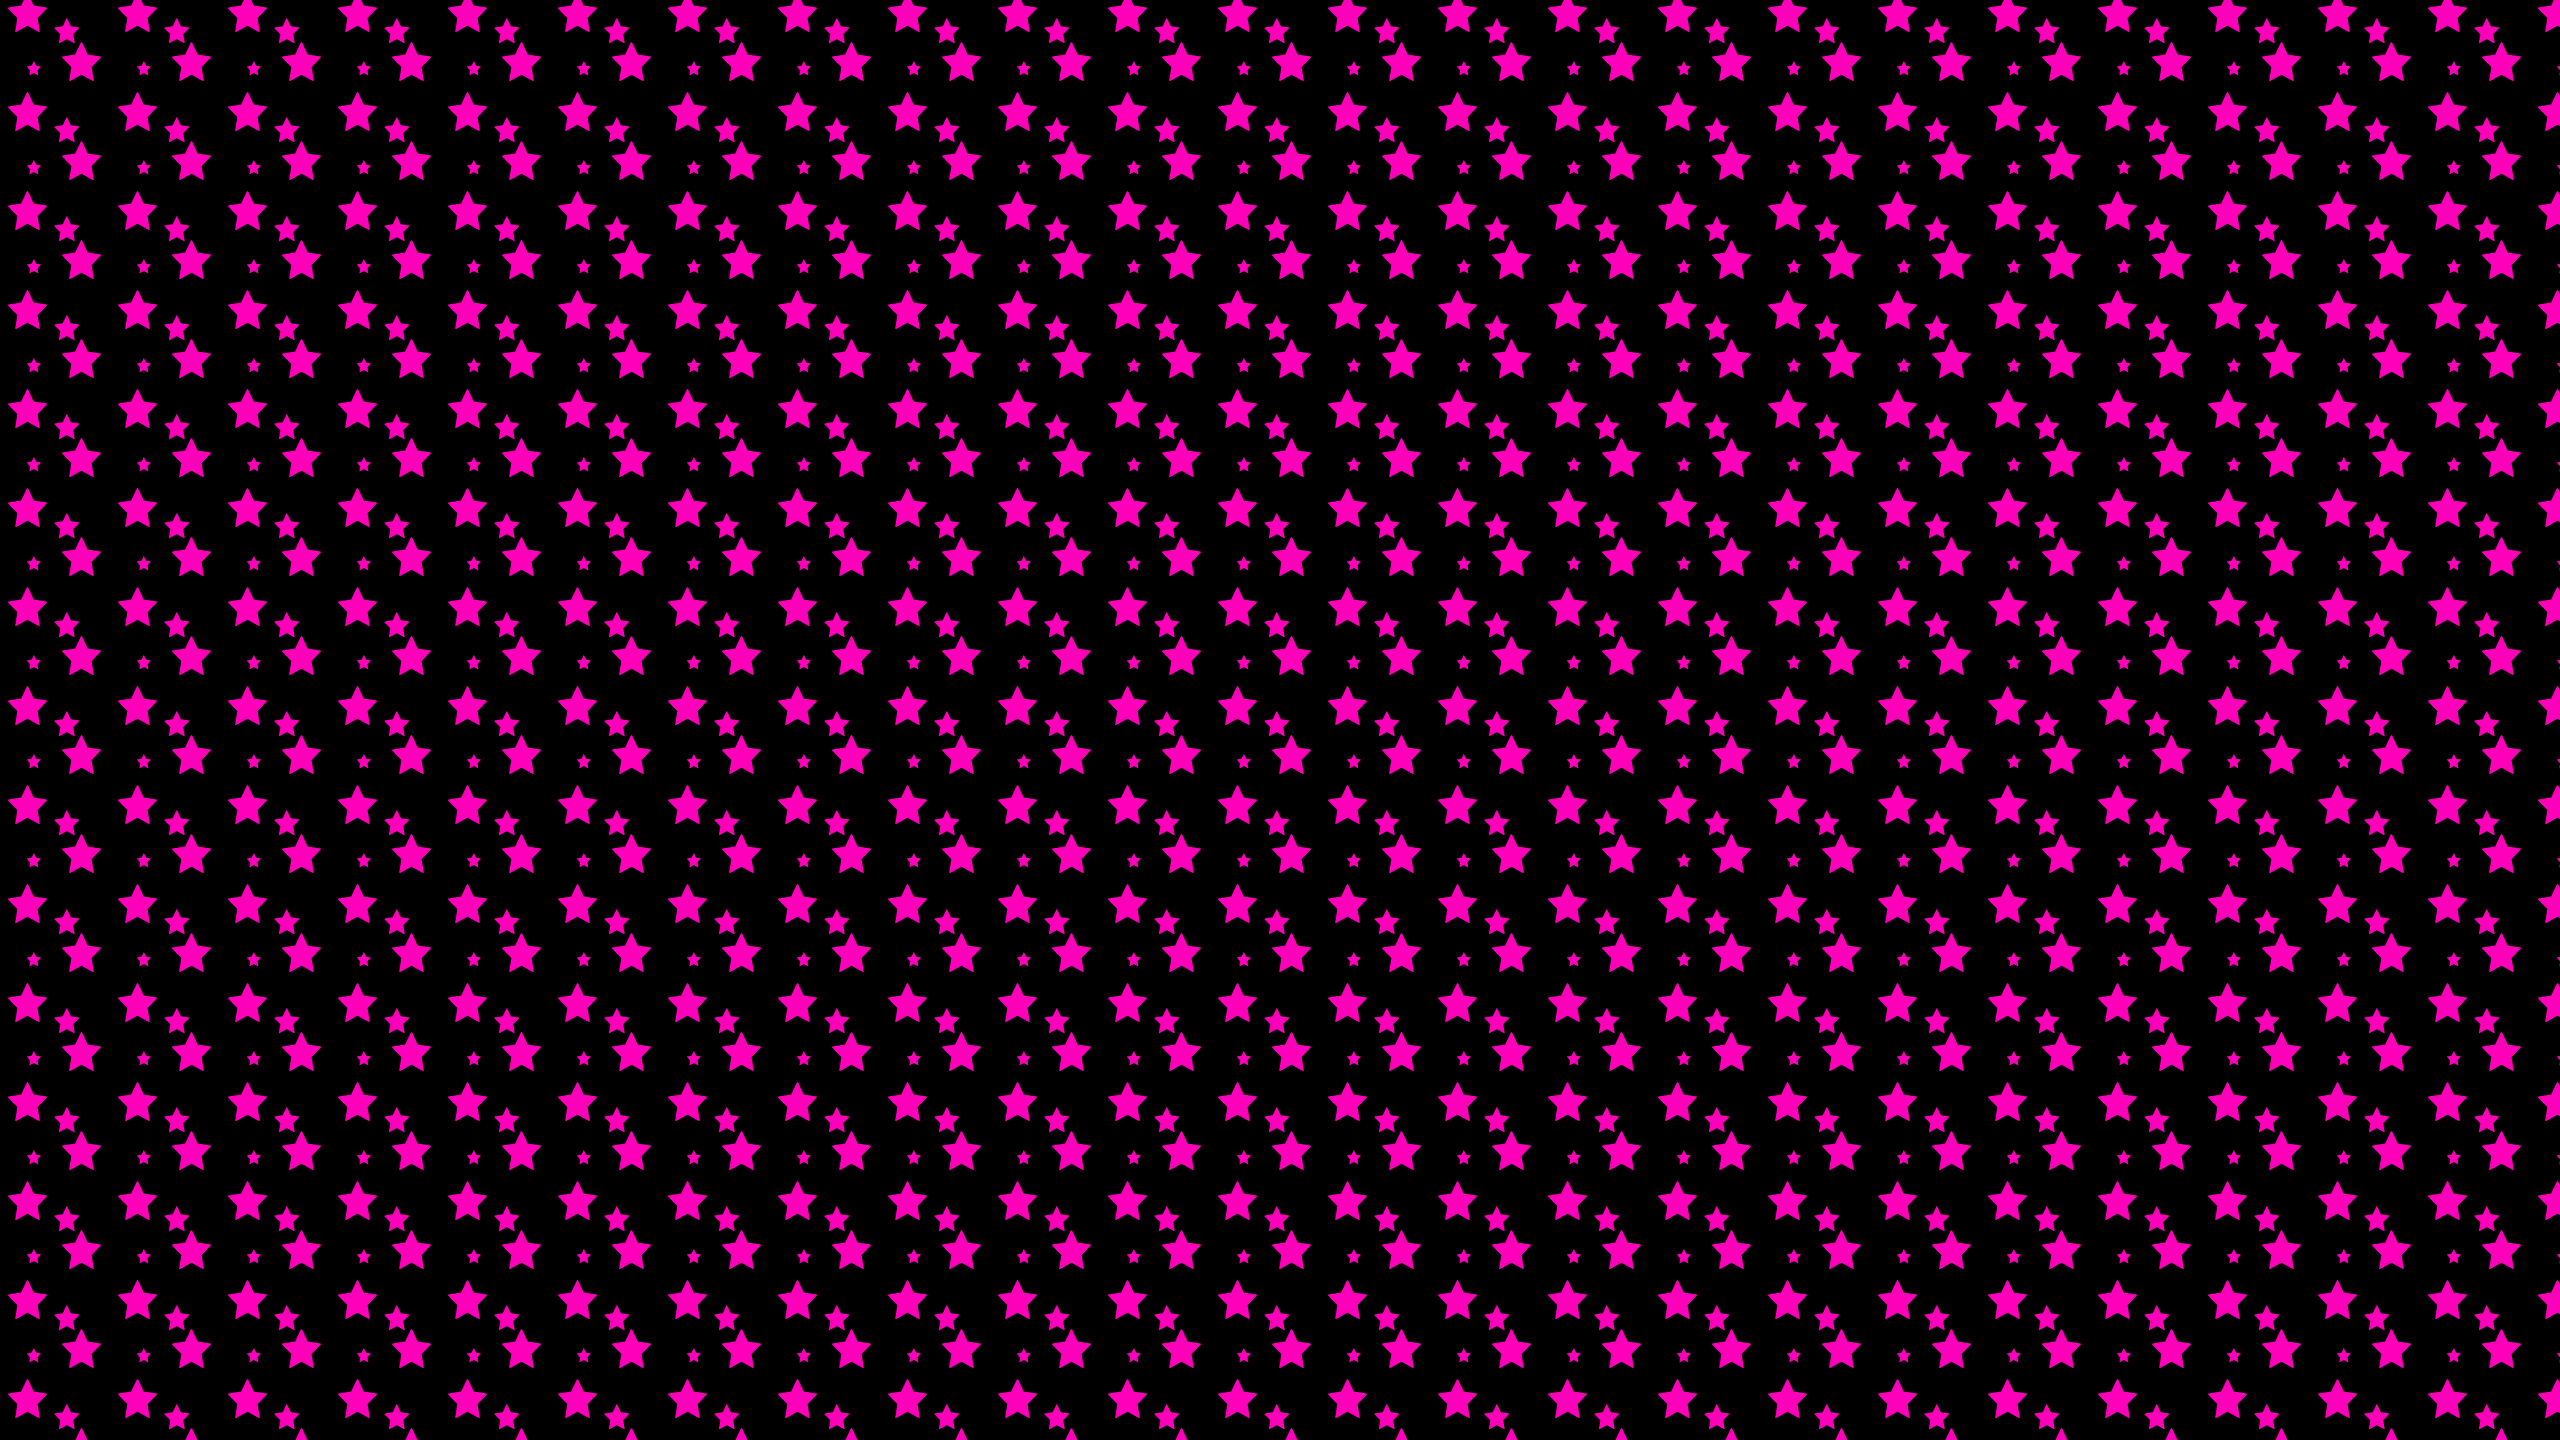 Pink Stars Falling Background Twitter Desktops